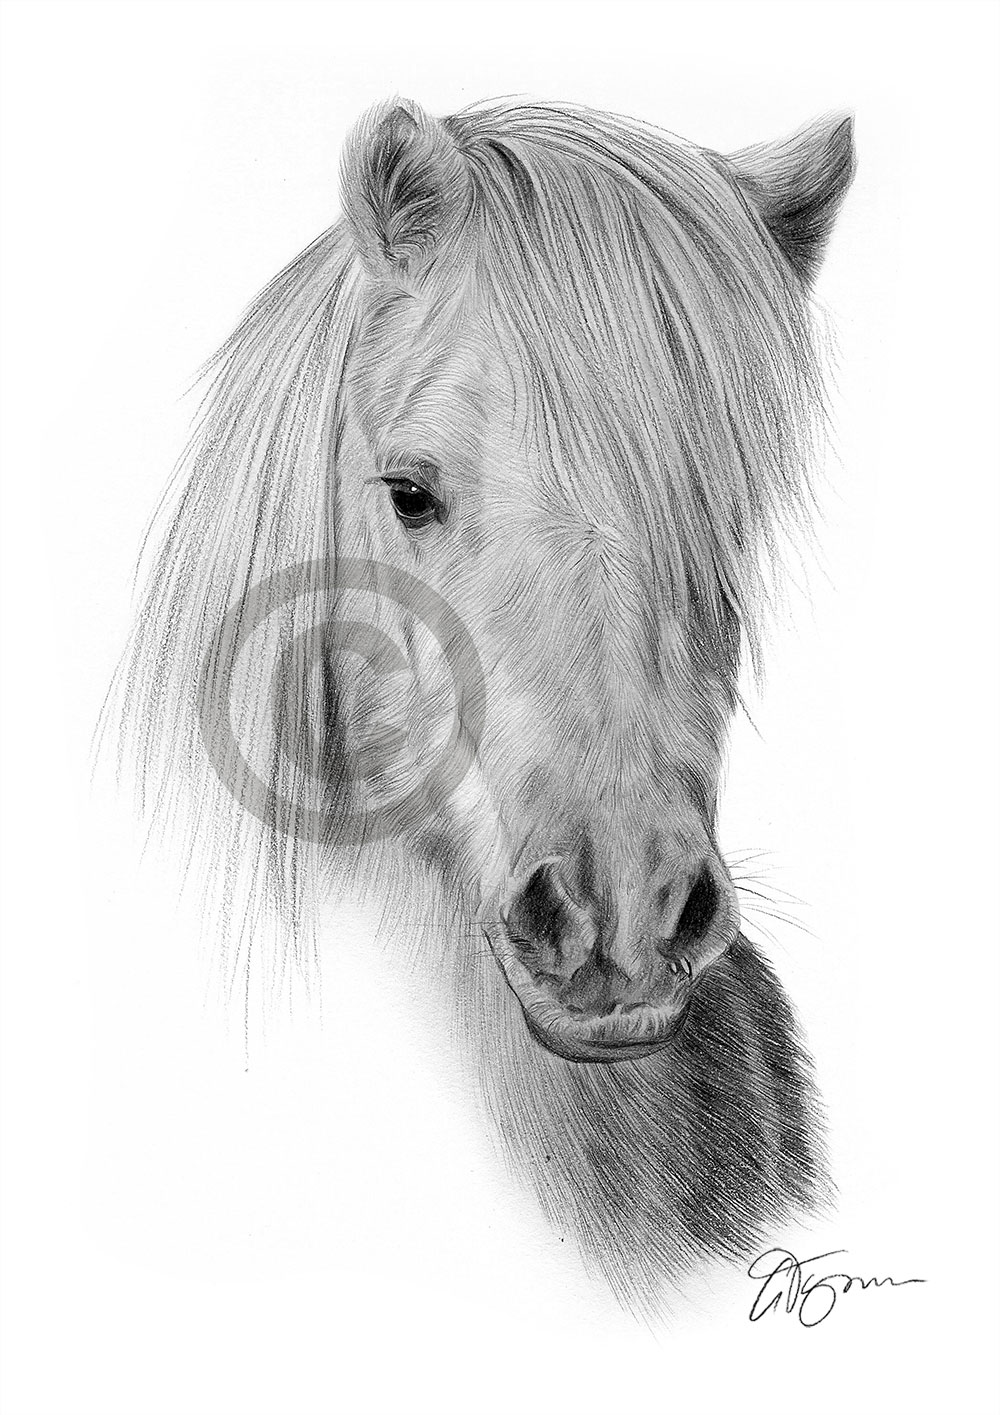 Pencil drawing of a shetland pony by artist Gary Tymon